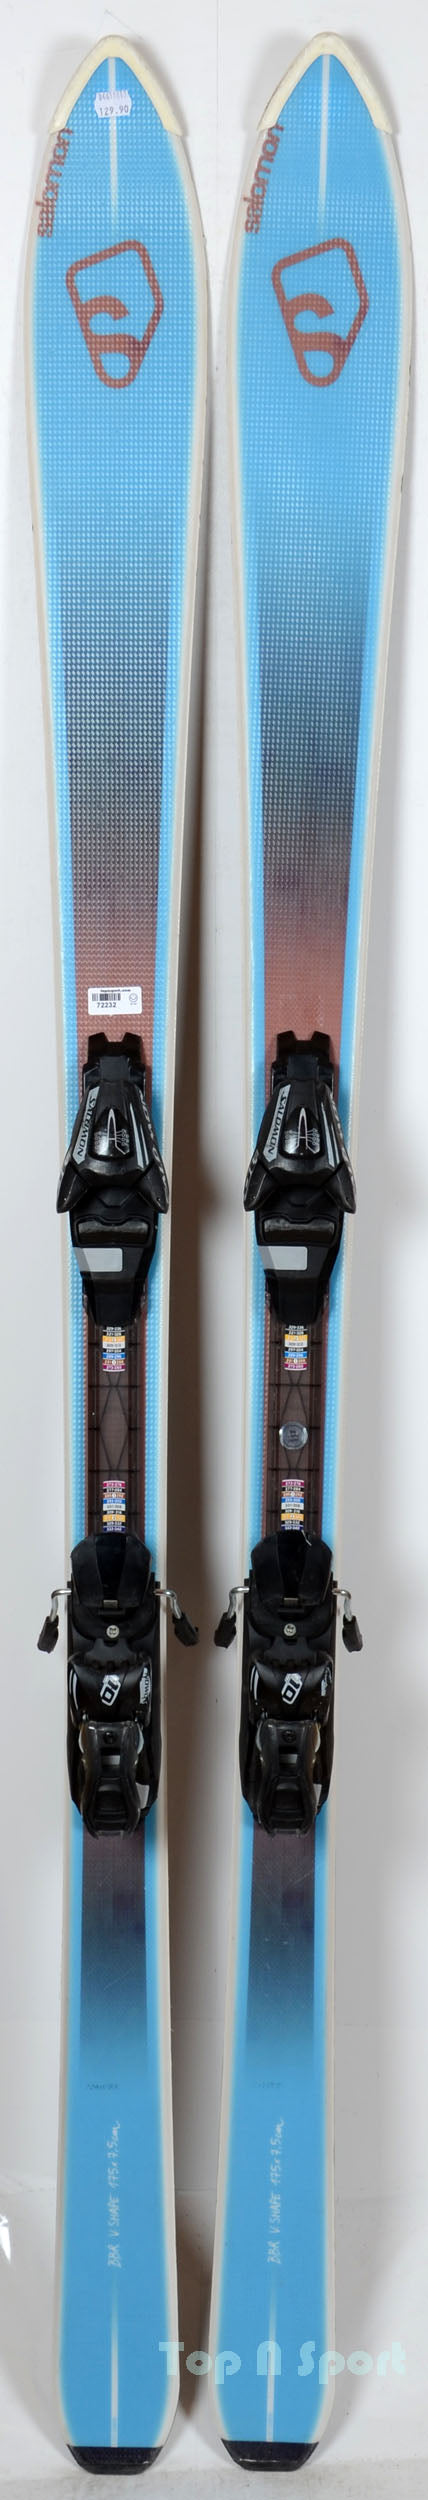 Salomon BBR 7,5 - skis d'occasion